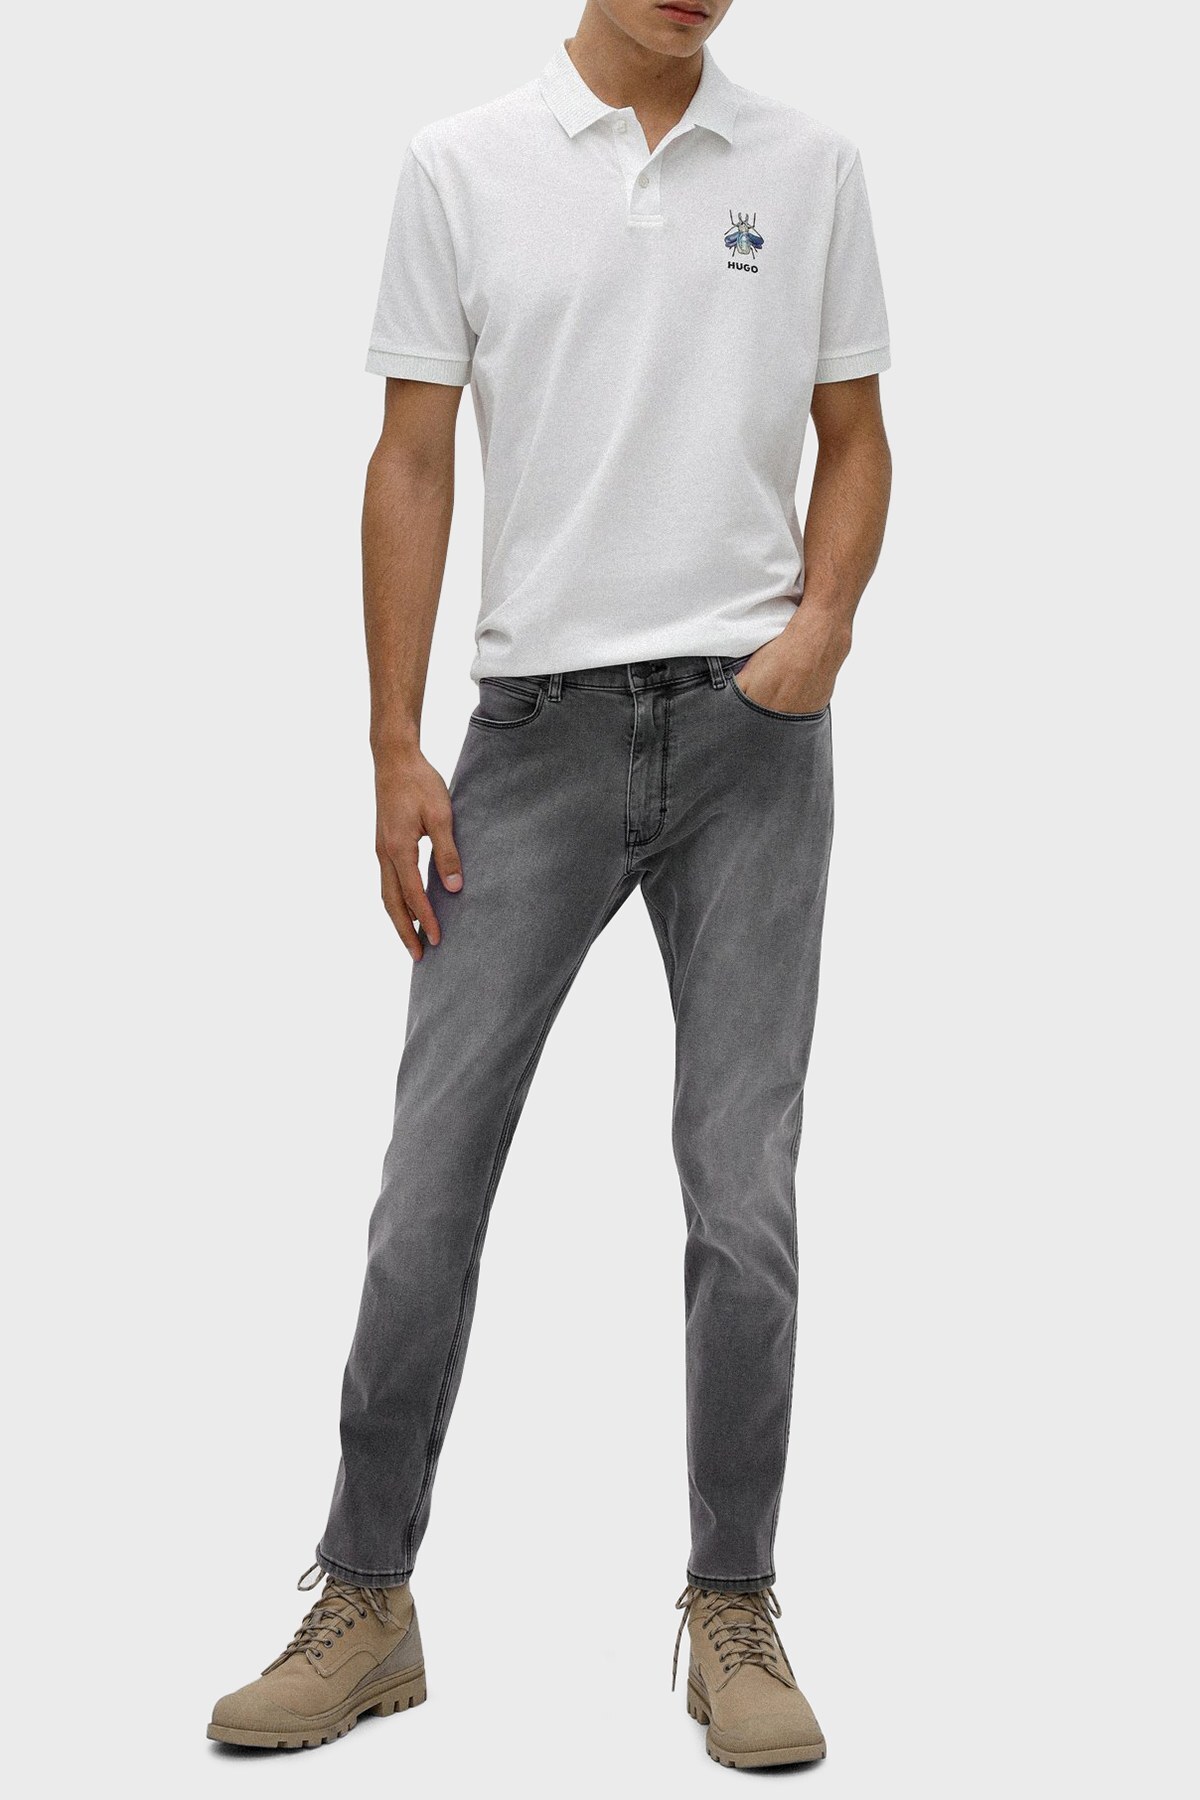 Hugo Pamuklu Streç Normal Bel Extra Slim Fit Jeans Erkek Kot Pantolon 50466748 030 GRİ